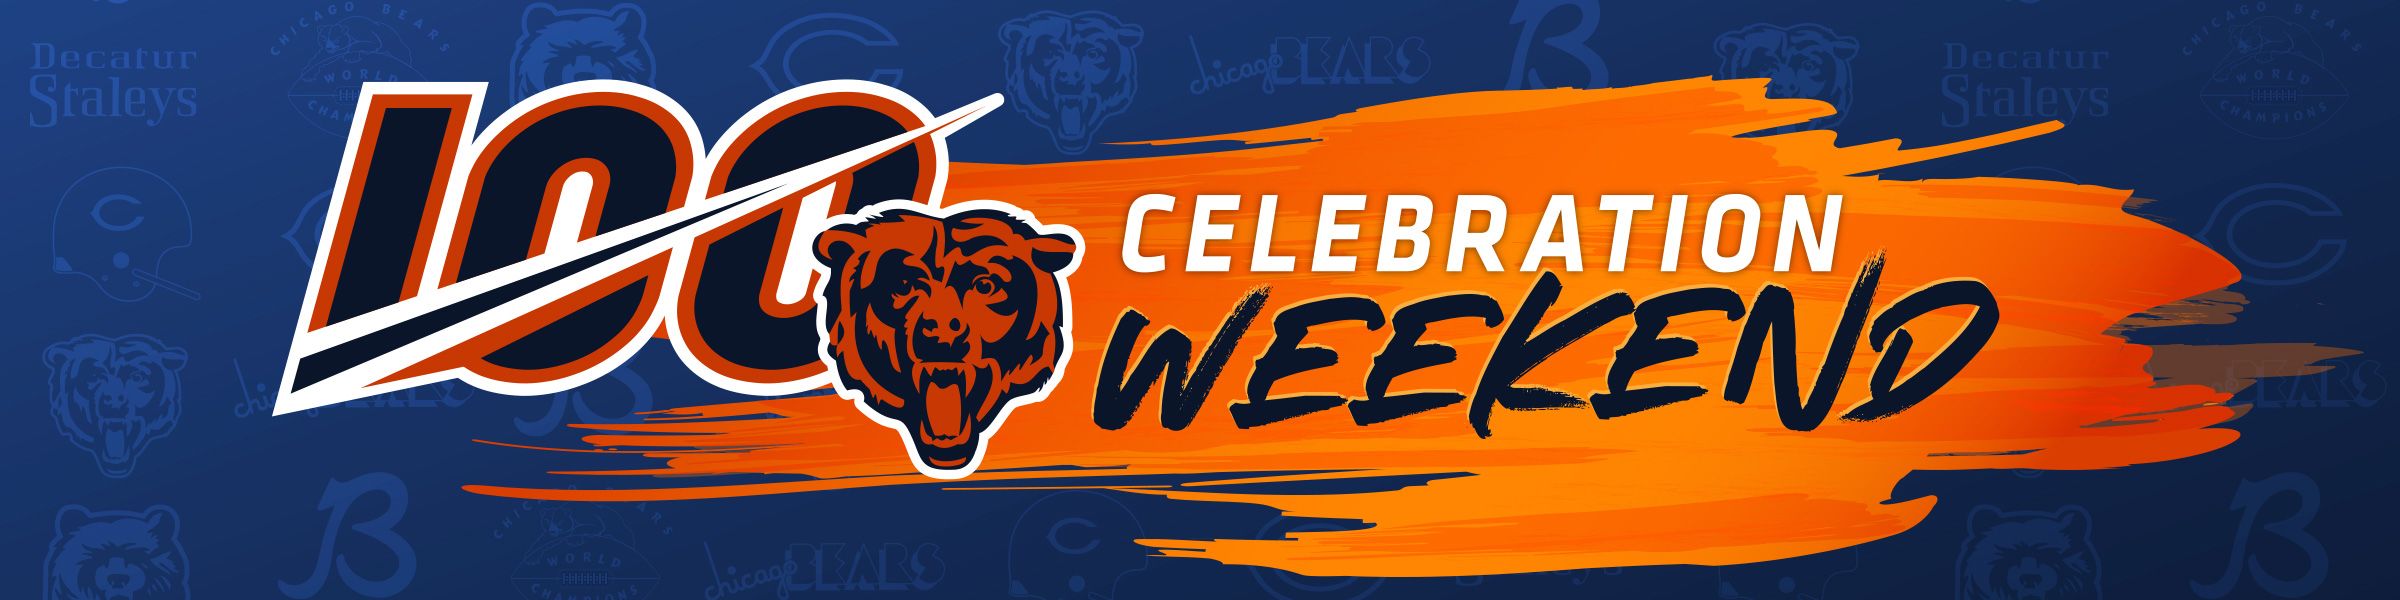 Bears100 Celebration Weekend  Chicago Bears Official Website